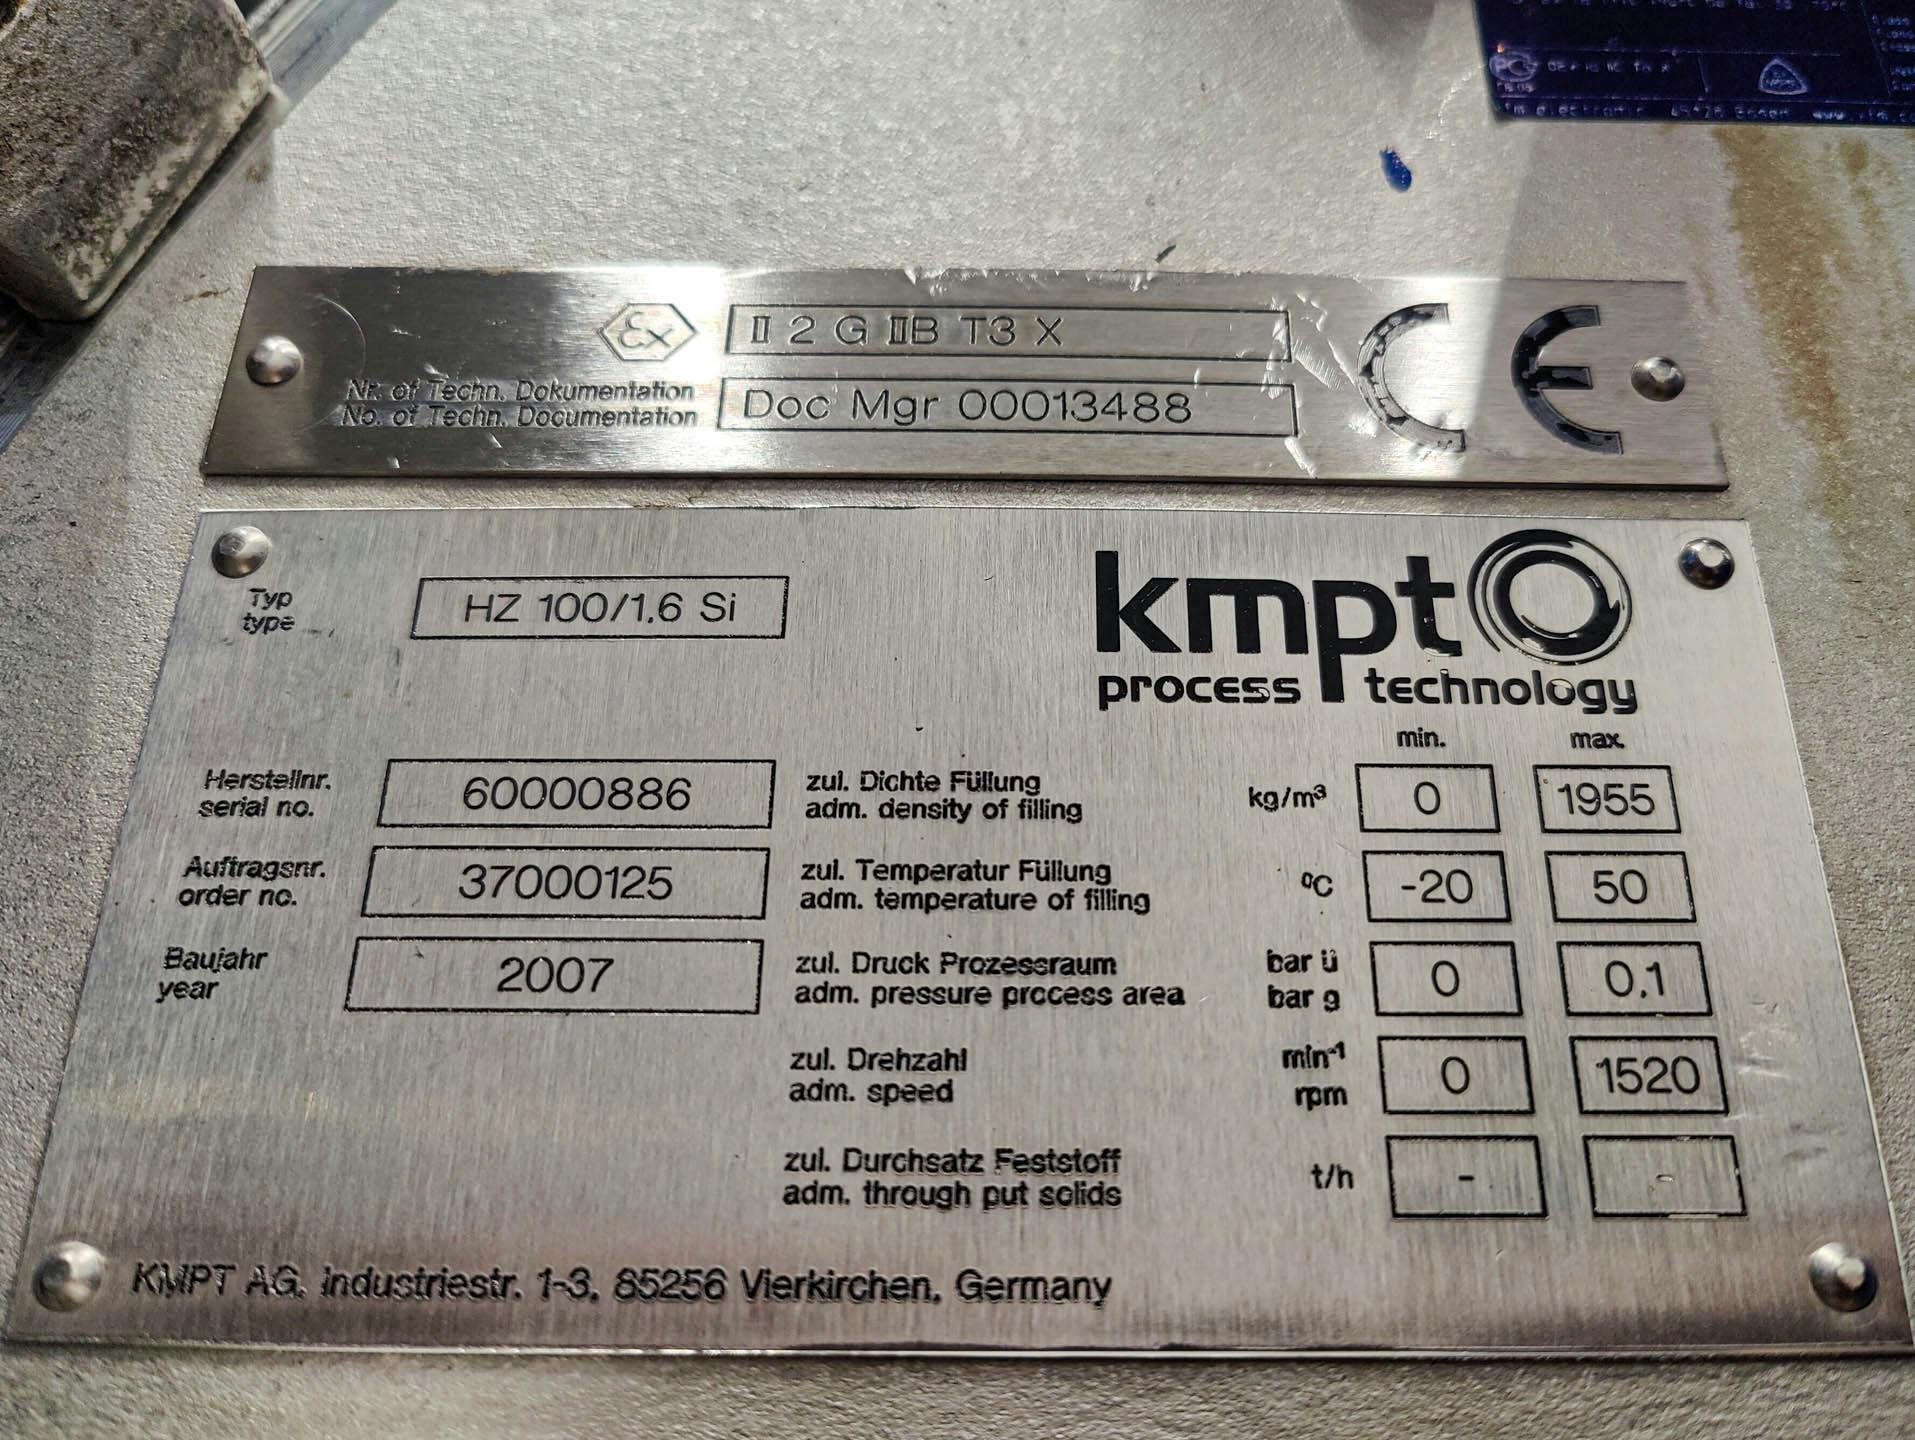 Andritz KMPT HZ-100/1.6 Si "syphon type centrifuge" - Скоростная центрифуга - image 9